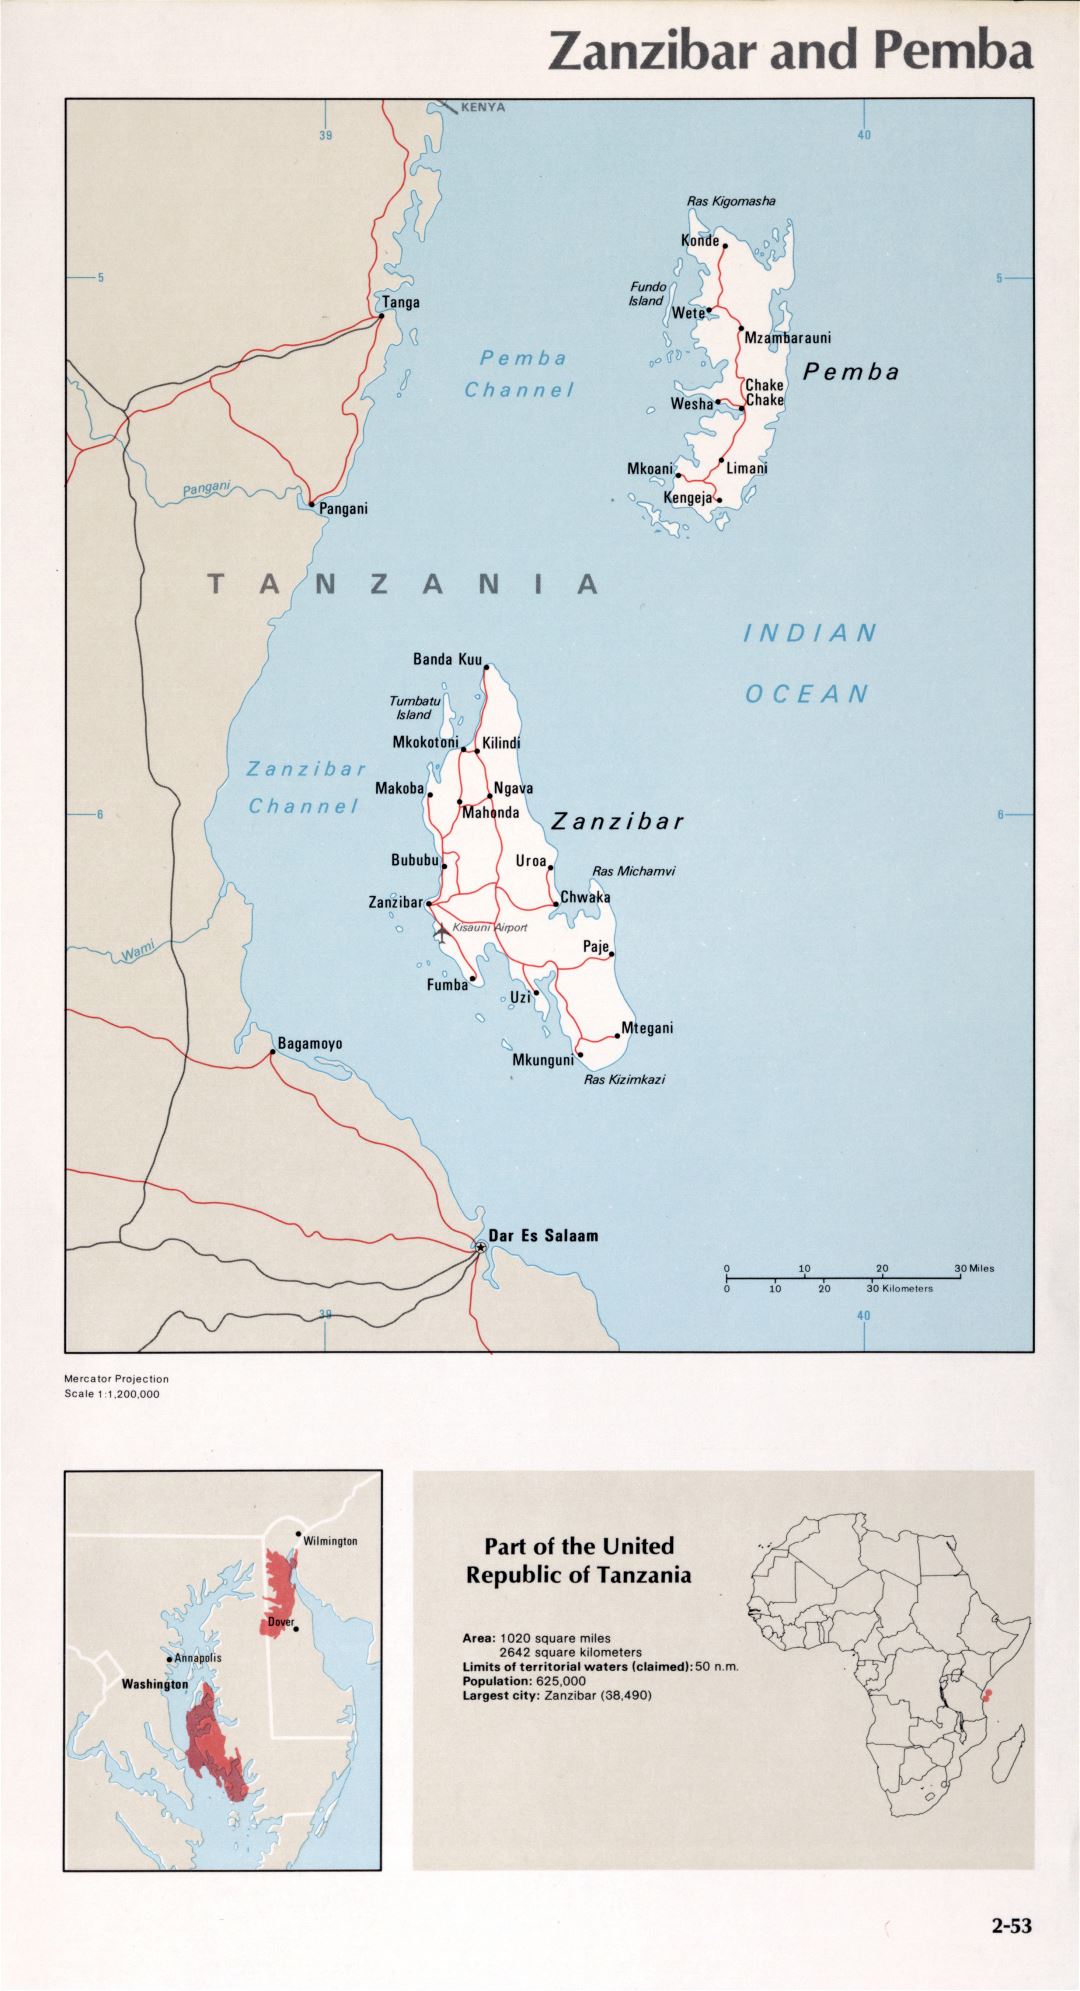 Map of Zanzibar and Pemba (2-53)